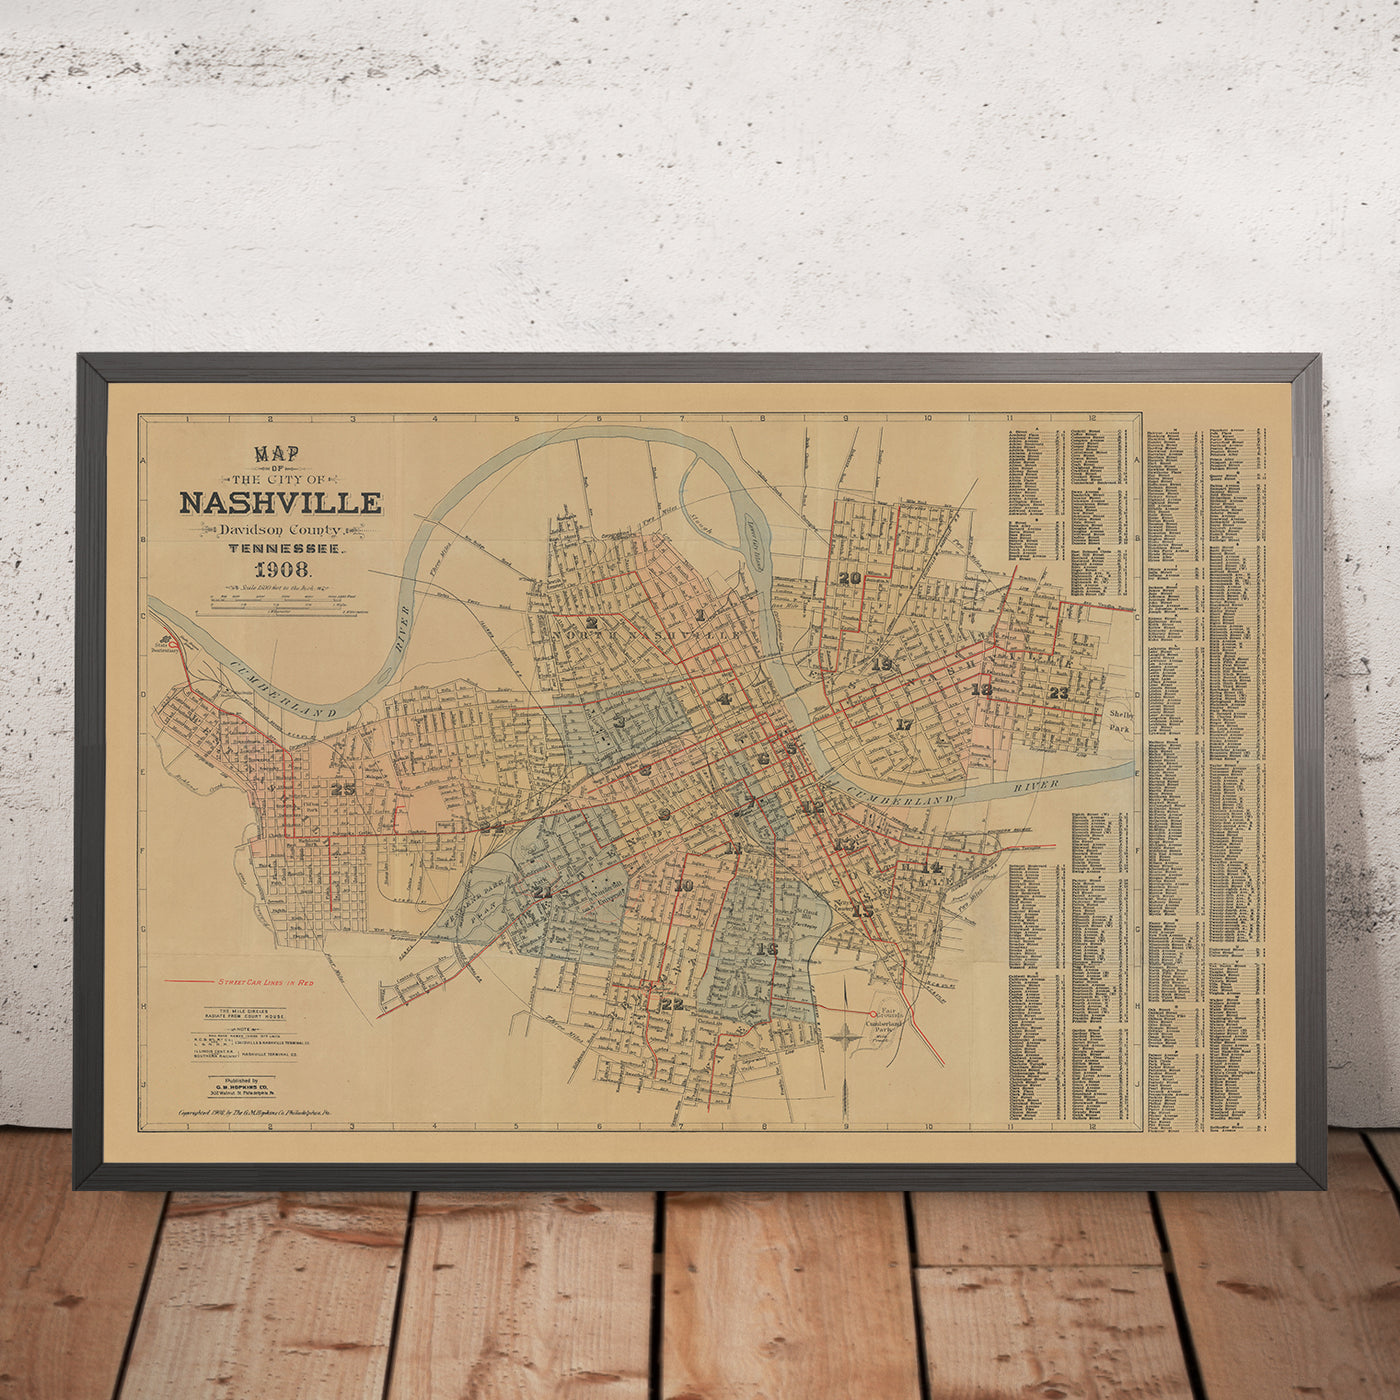 Mapa antiguo de Nashville por Hopkins, 1908: Río Cumberland, Capitolio del Estado, Vanderbilt, Centennial Park, Auditorio Ryman